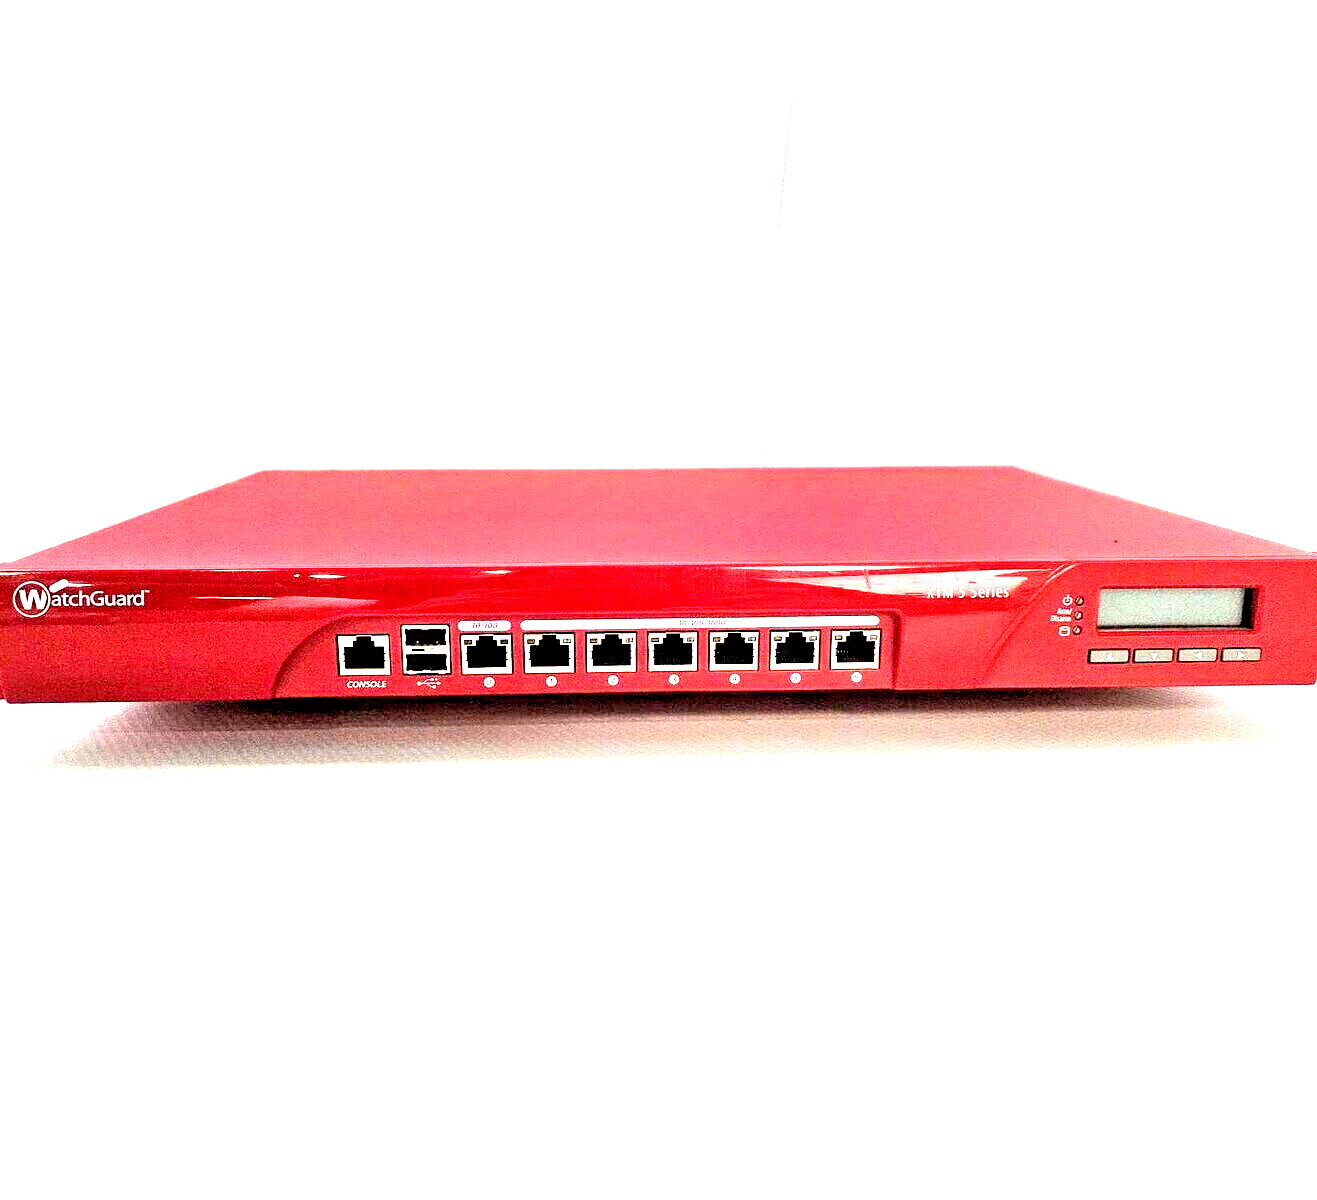 PfSense WatchGuard XTM5 505 Firewall Router VPN 1U Server OpnSense PfSense 🍁